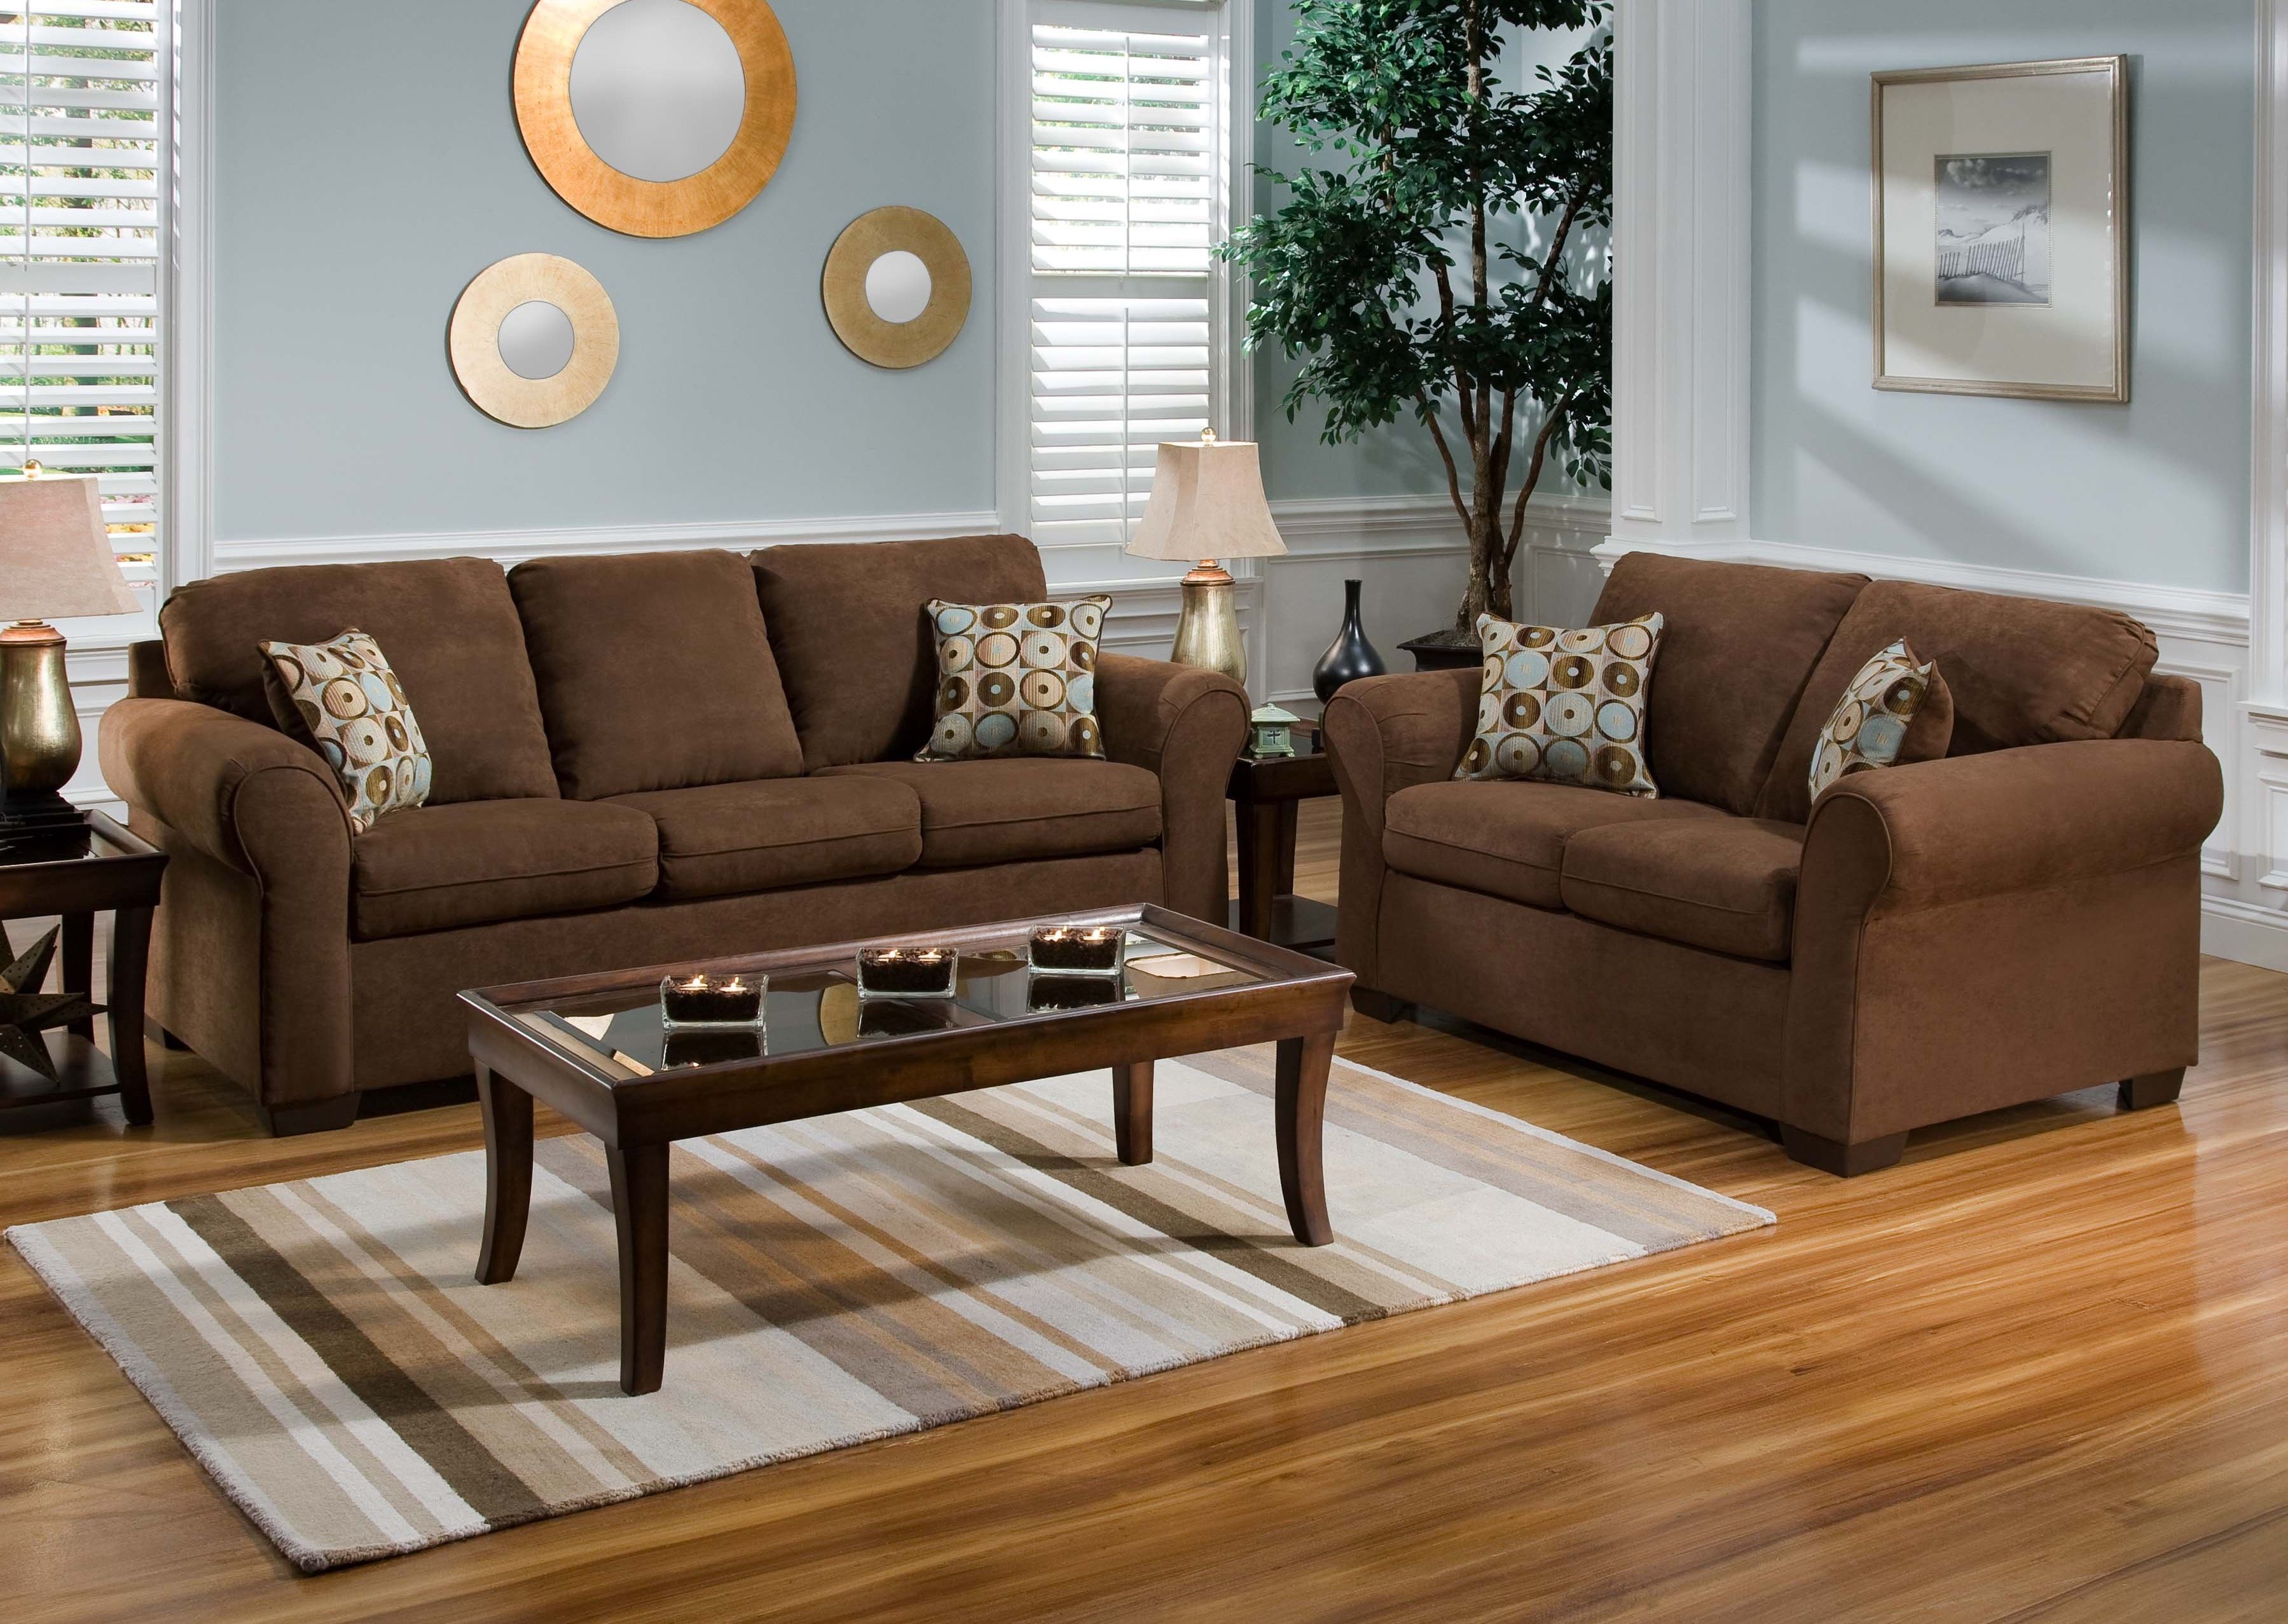 Full-size living room furniture: sofa furniture envelops couch cut leather CJQSGFR